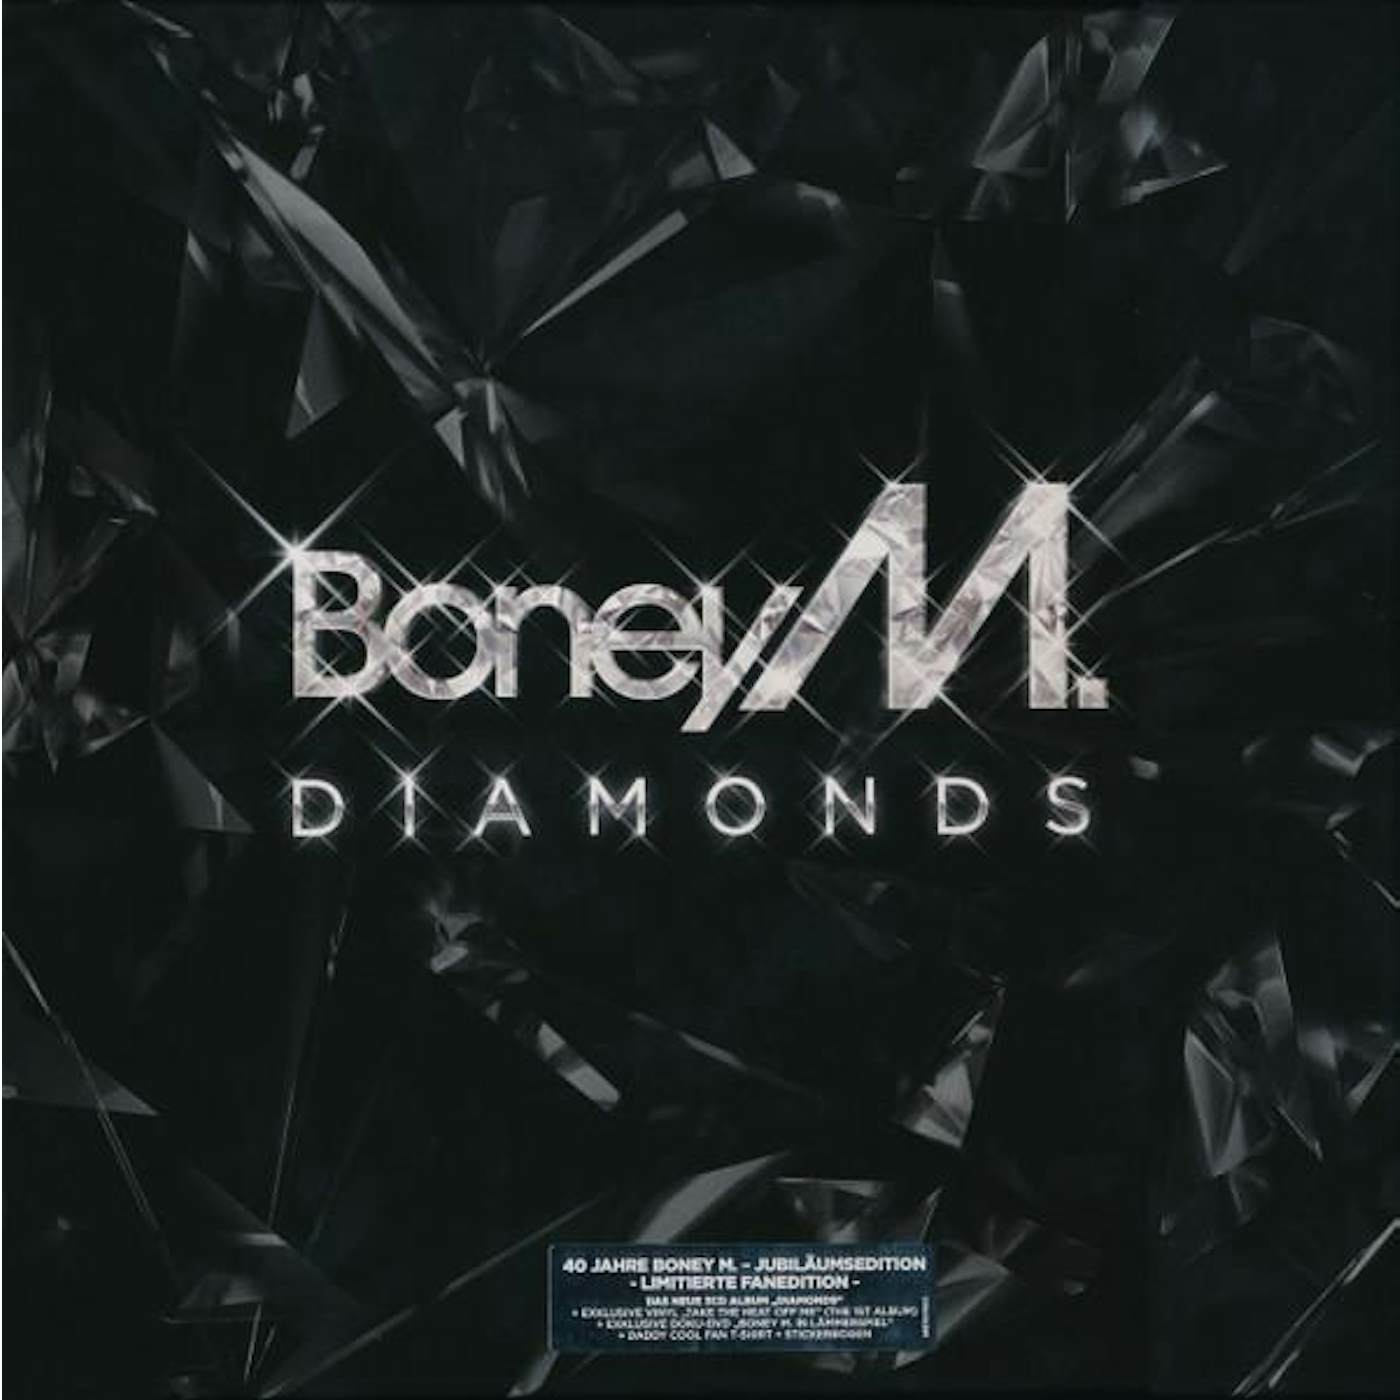 Boney M. DIAMONDS CD